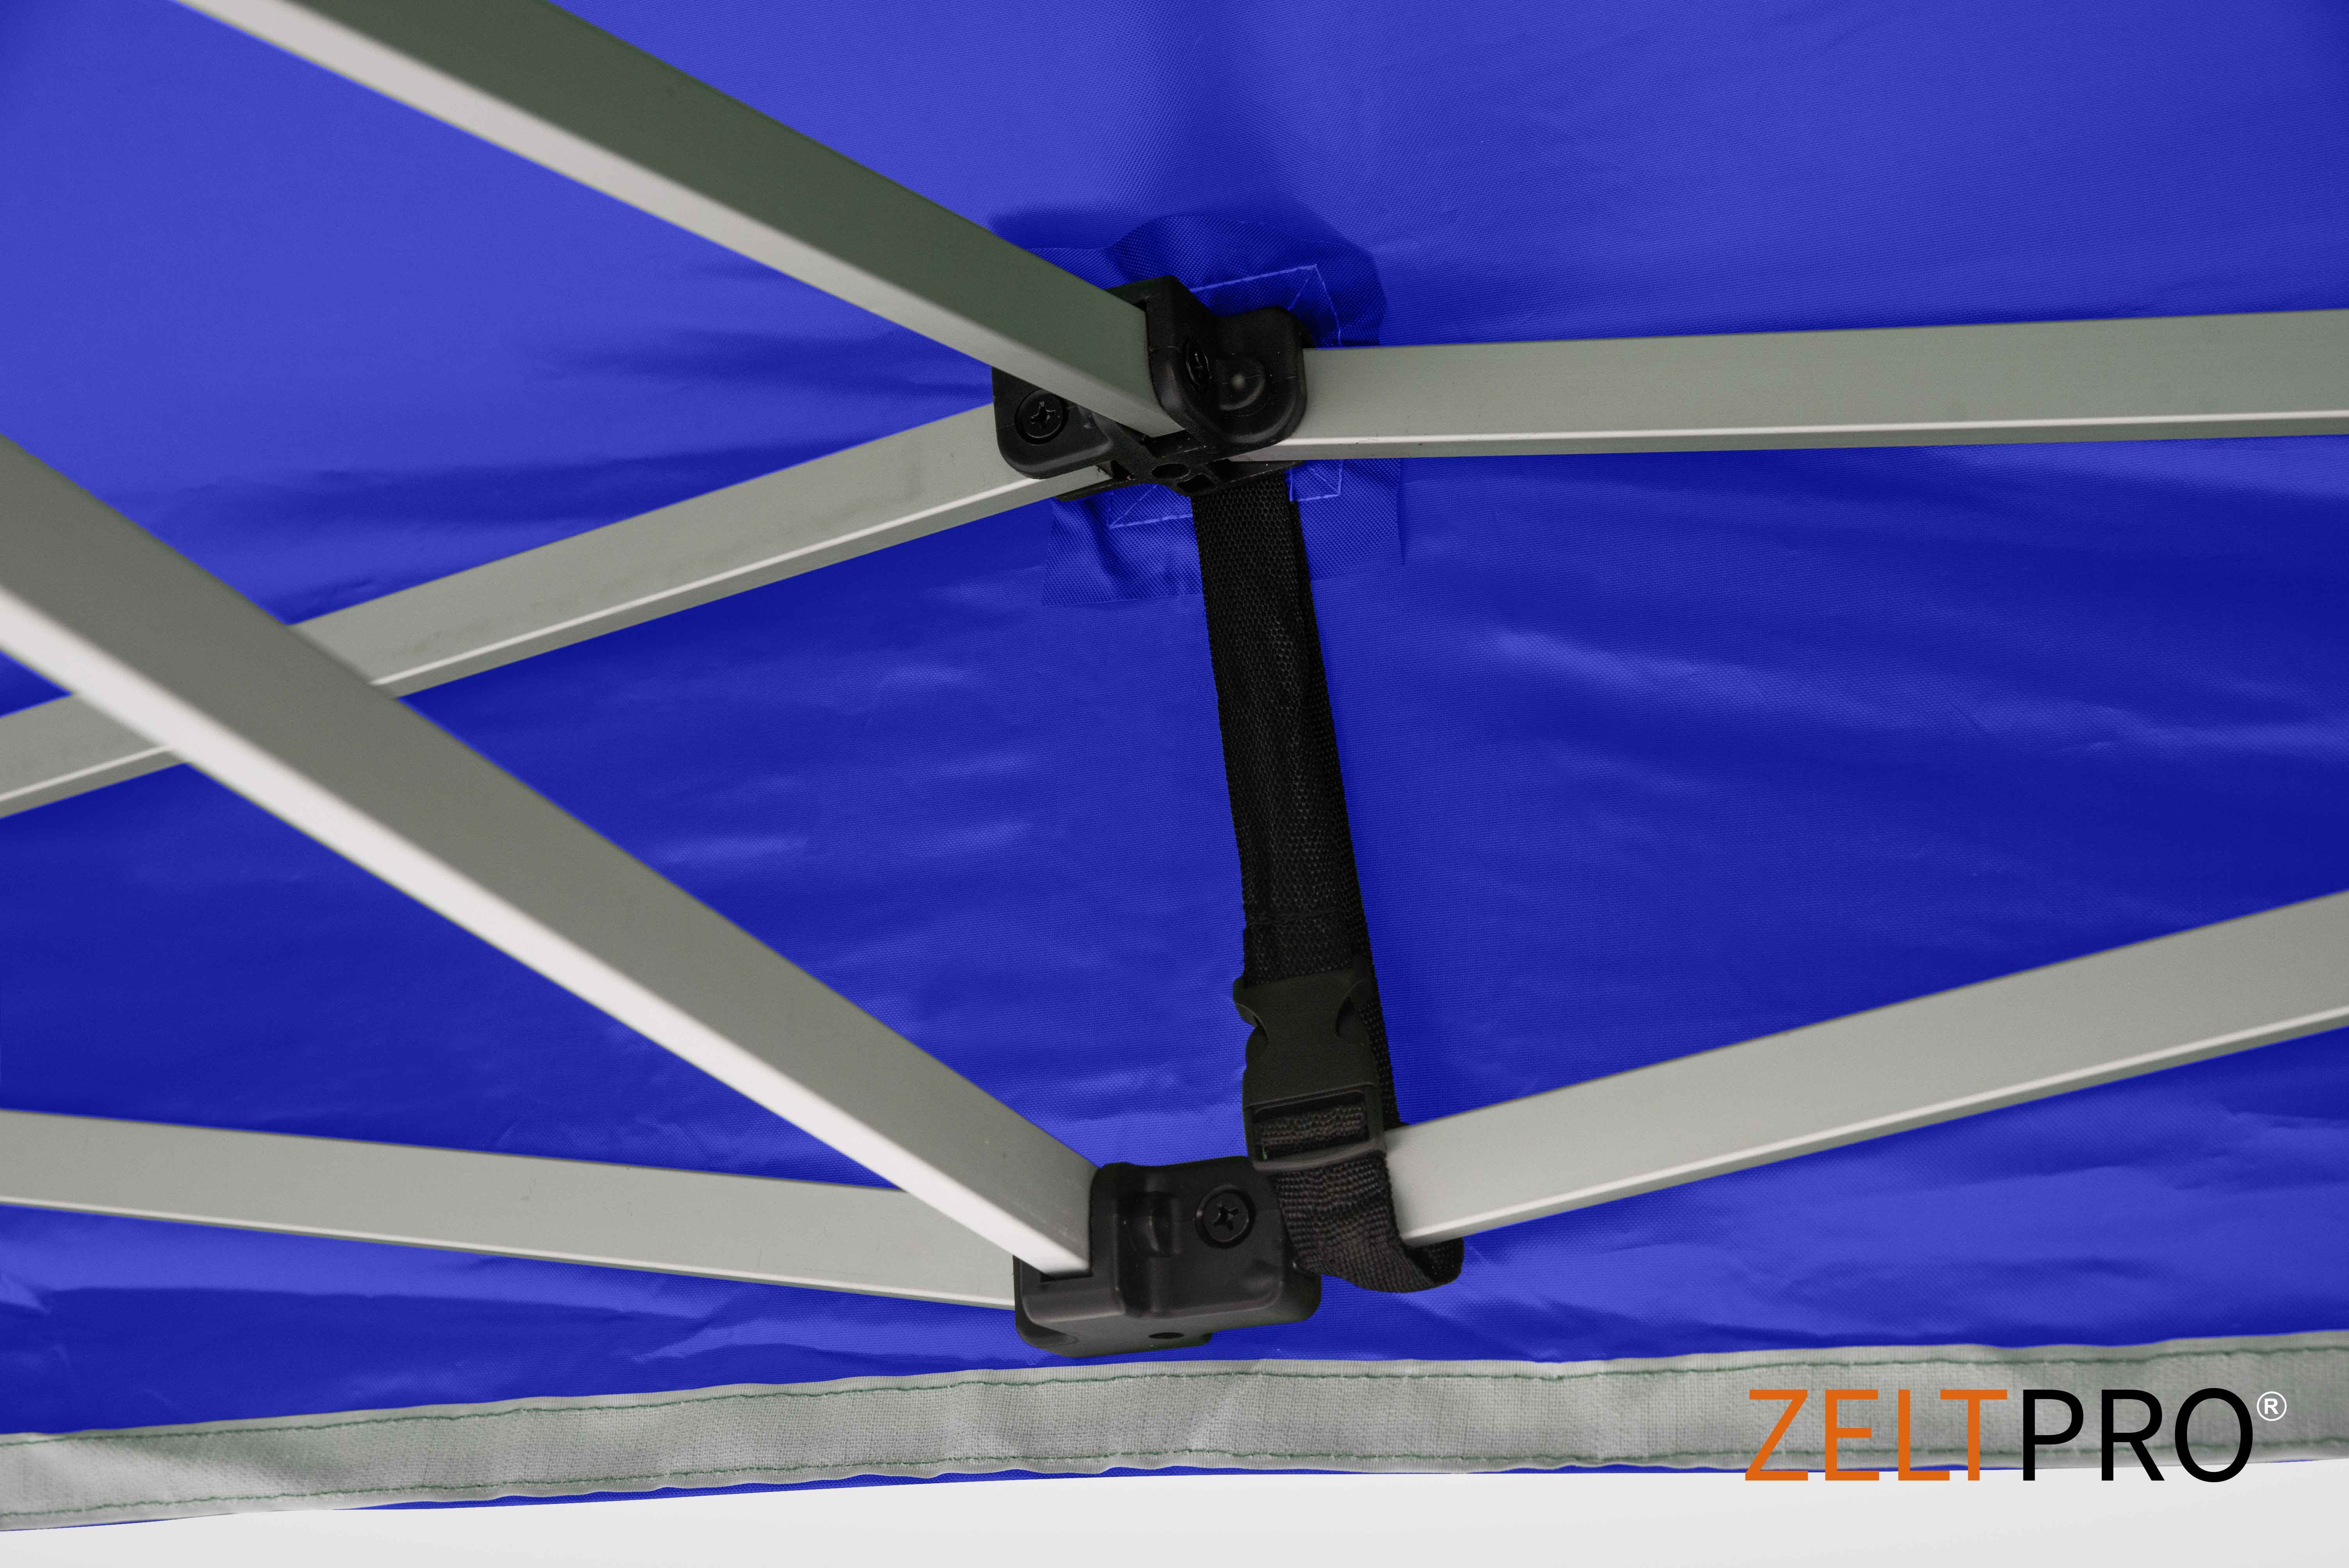 Prekybinė Palapinė 3x6 Mėlyna Zeltpro TITAN